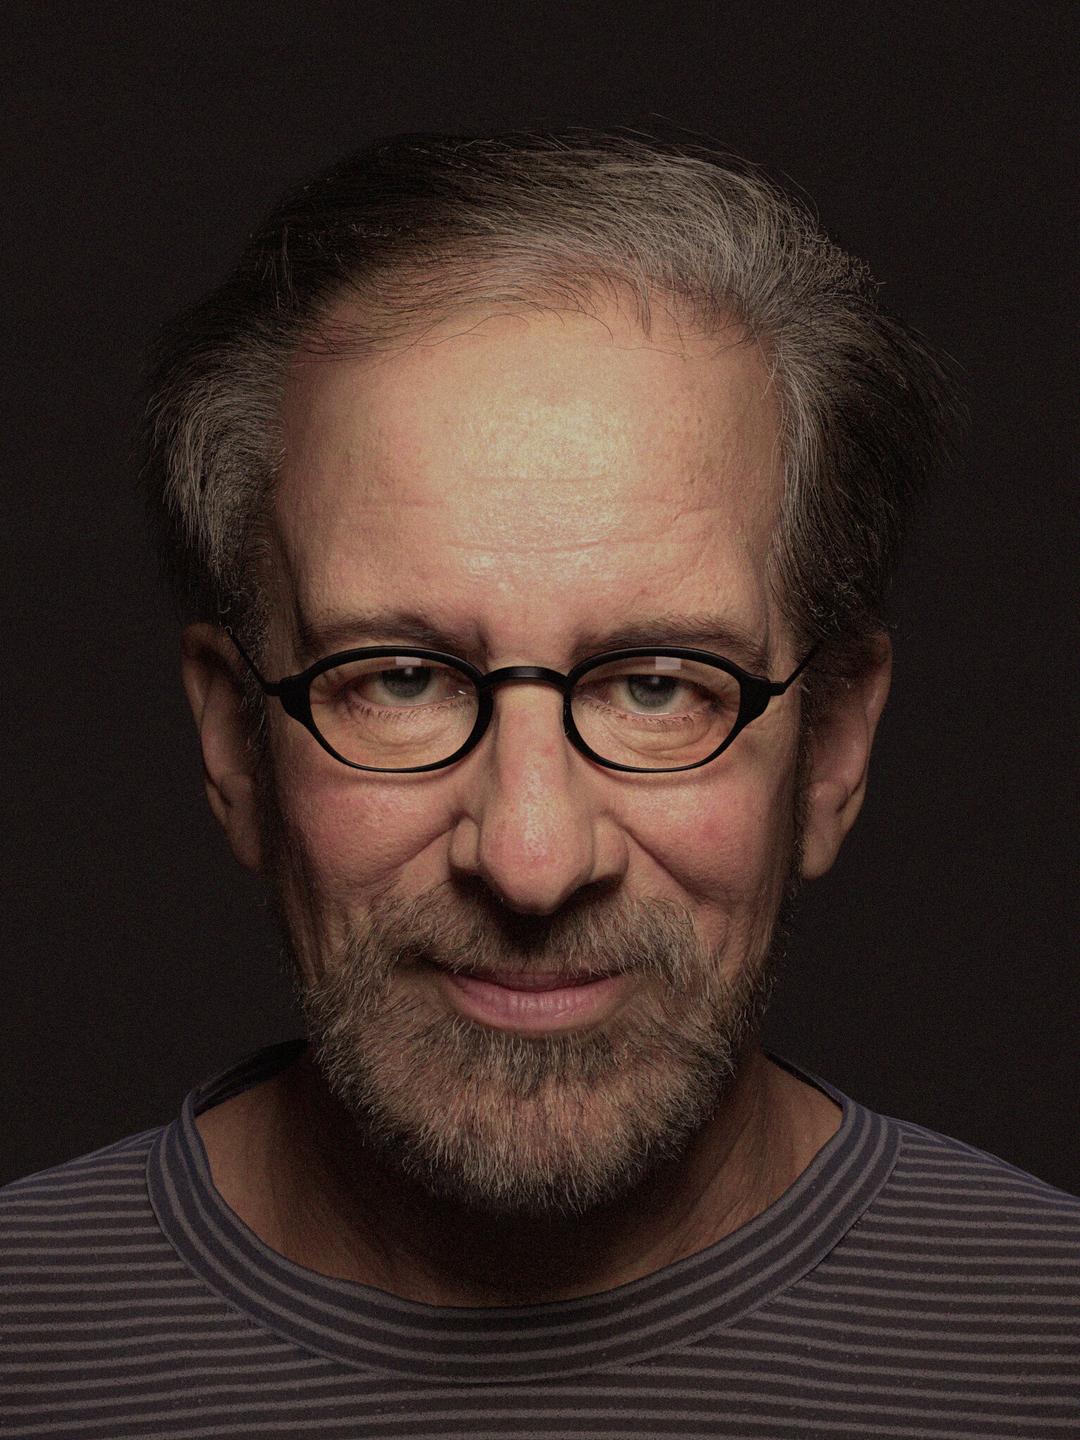 Steven Spielberg city of birth